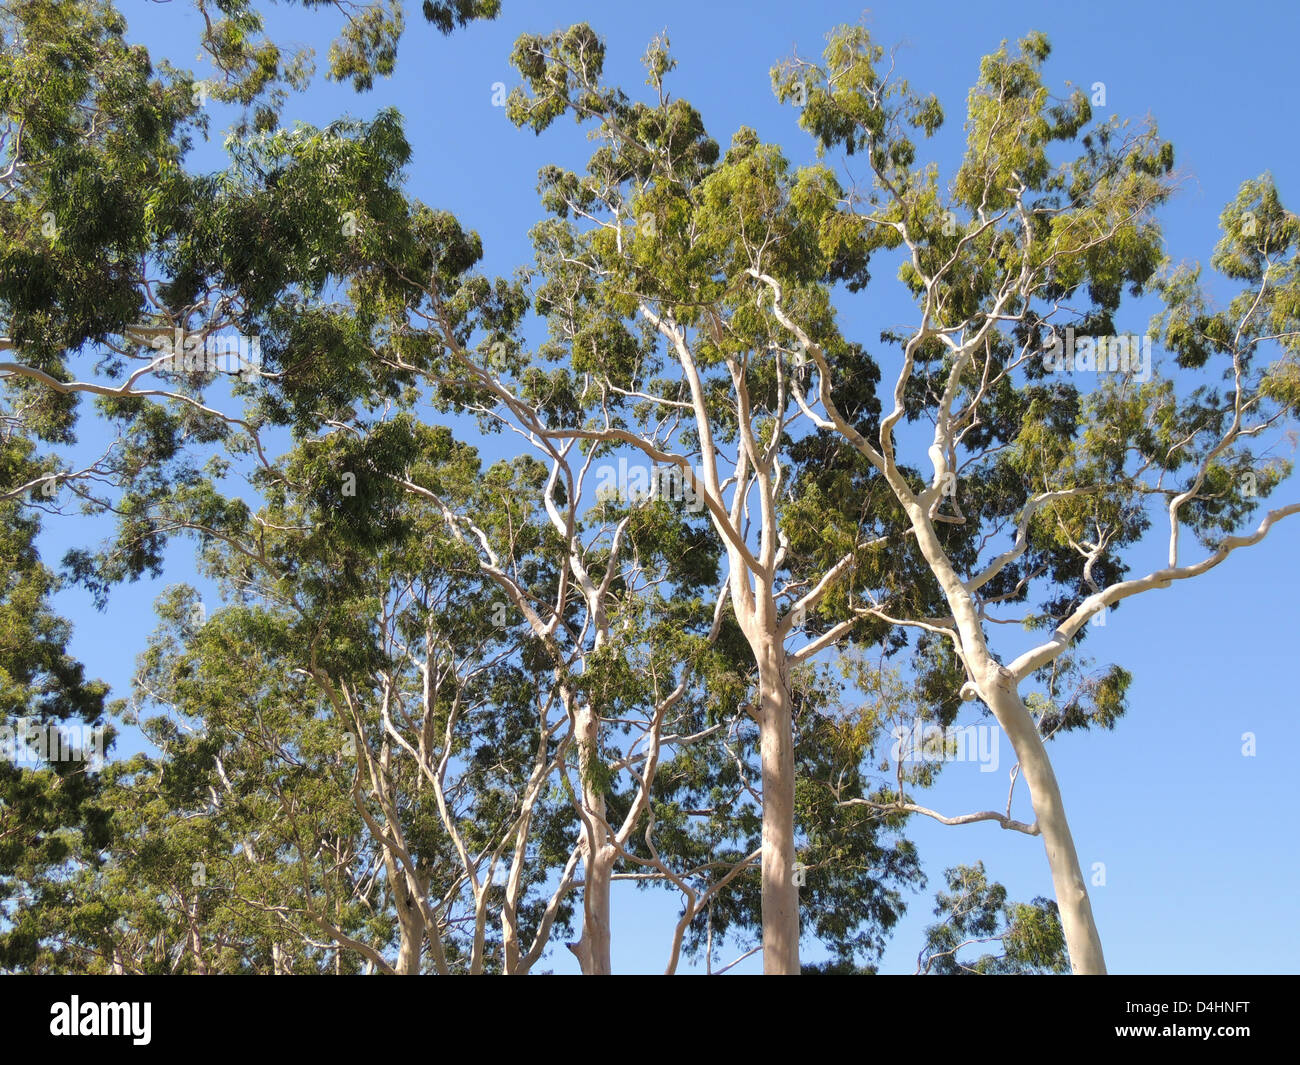 PERTH, Australia. Lemon-scented Gum trees (Corymbia citriodora) in Kings Park overlooking the city. Photo Tony Gale Stock Photo